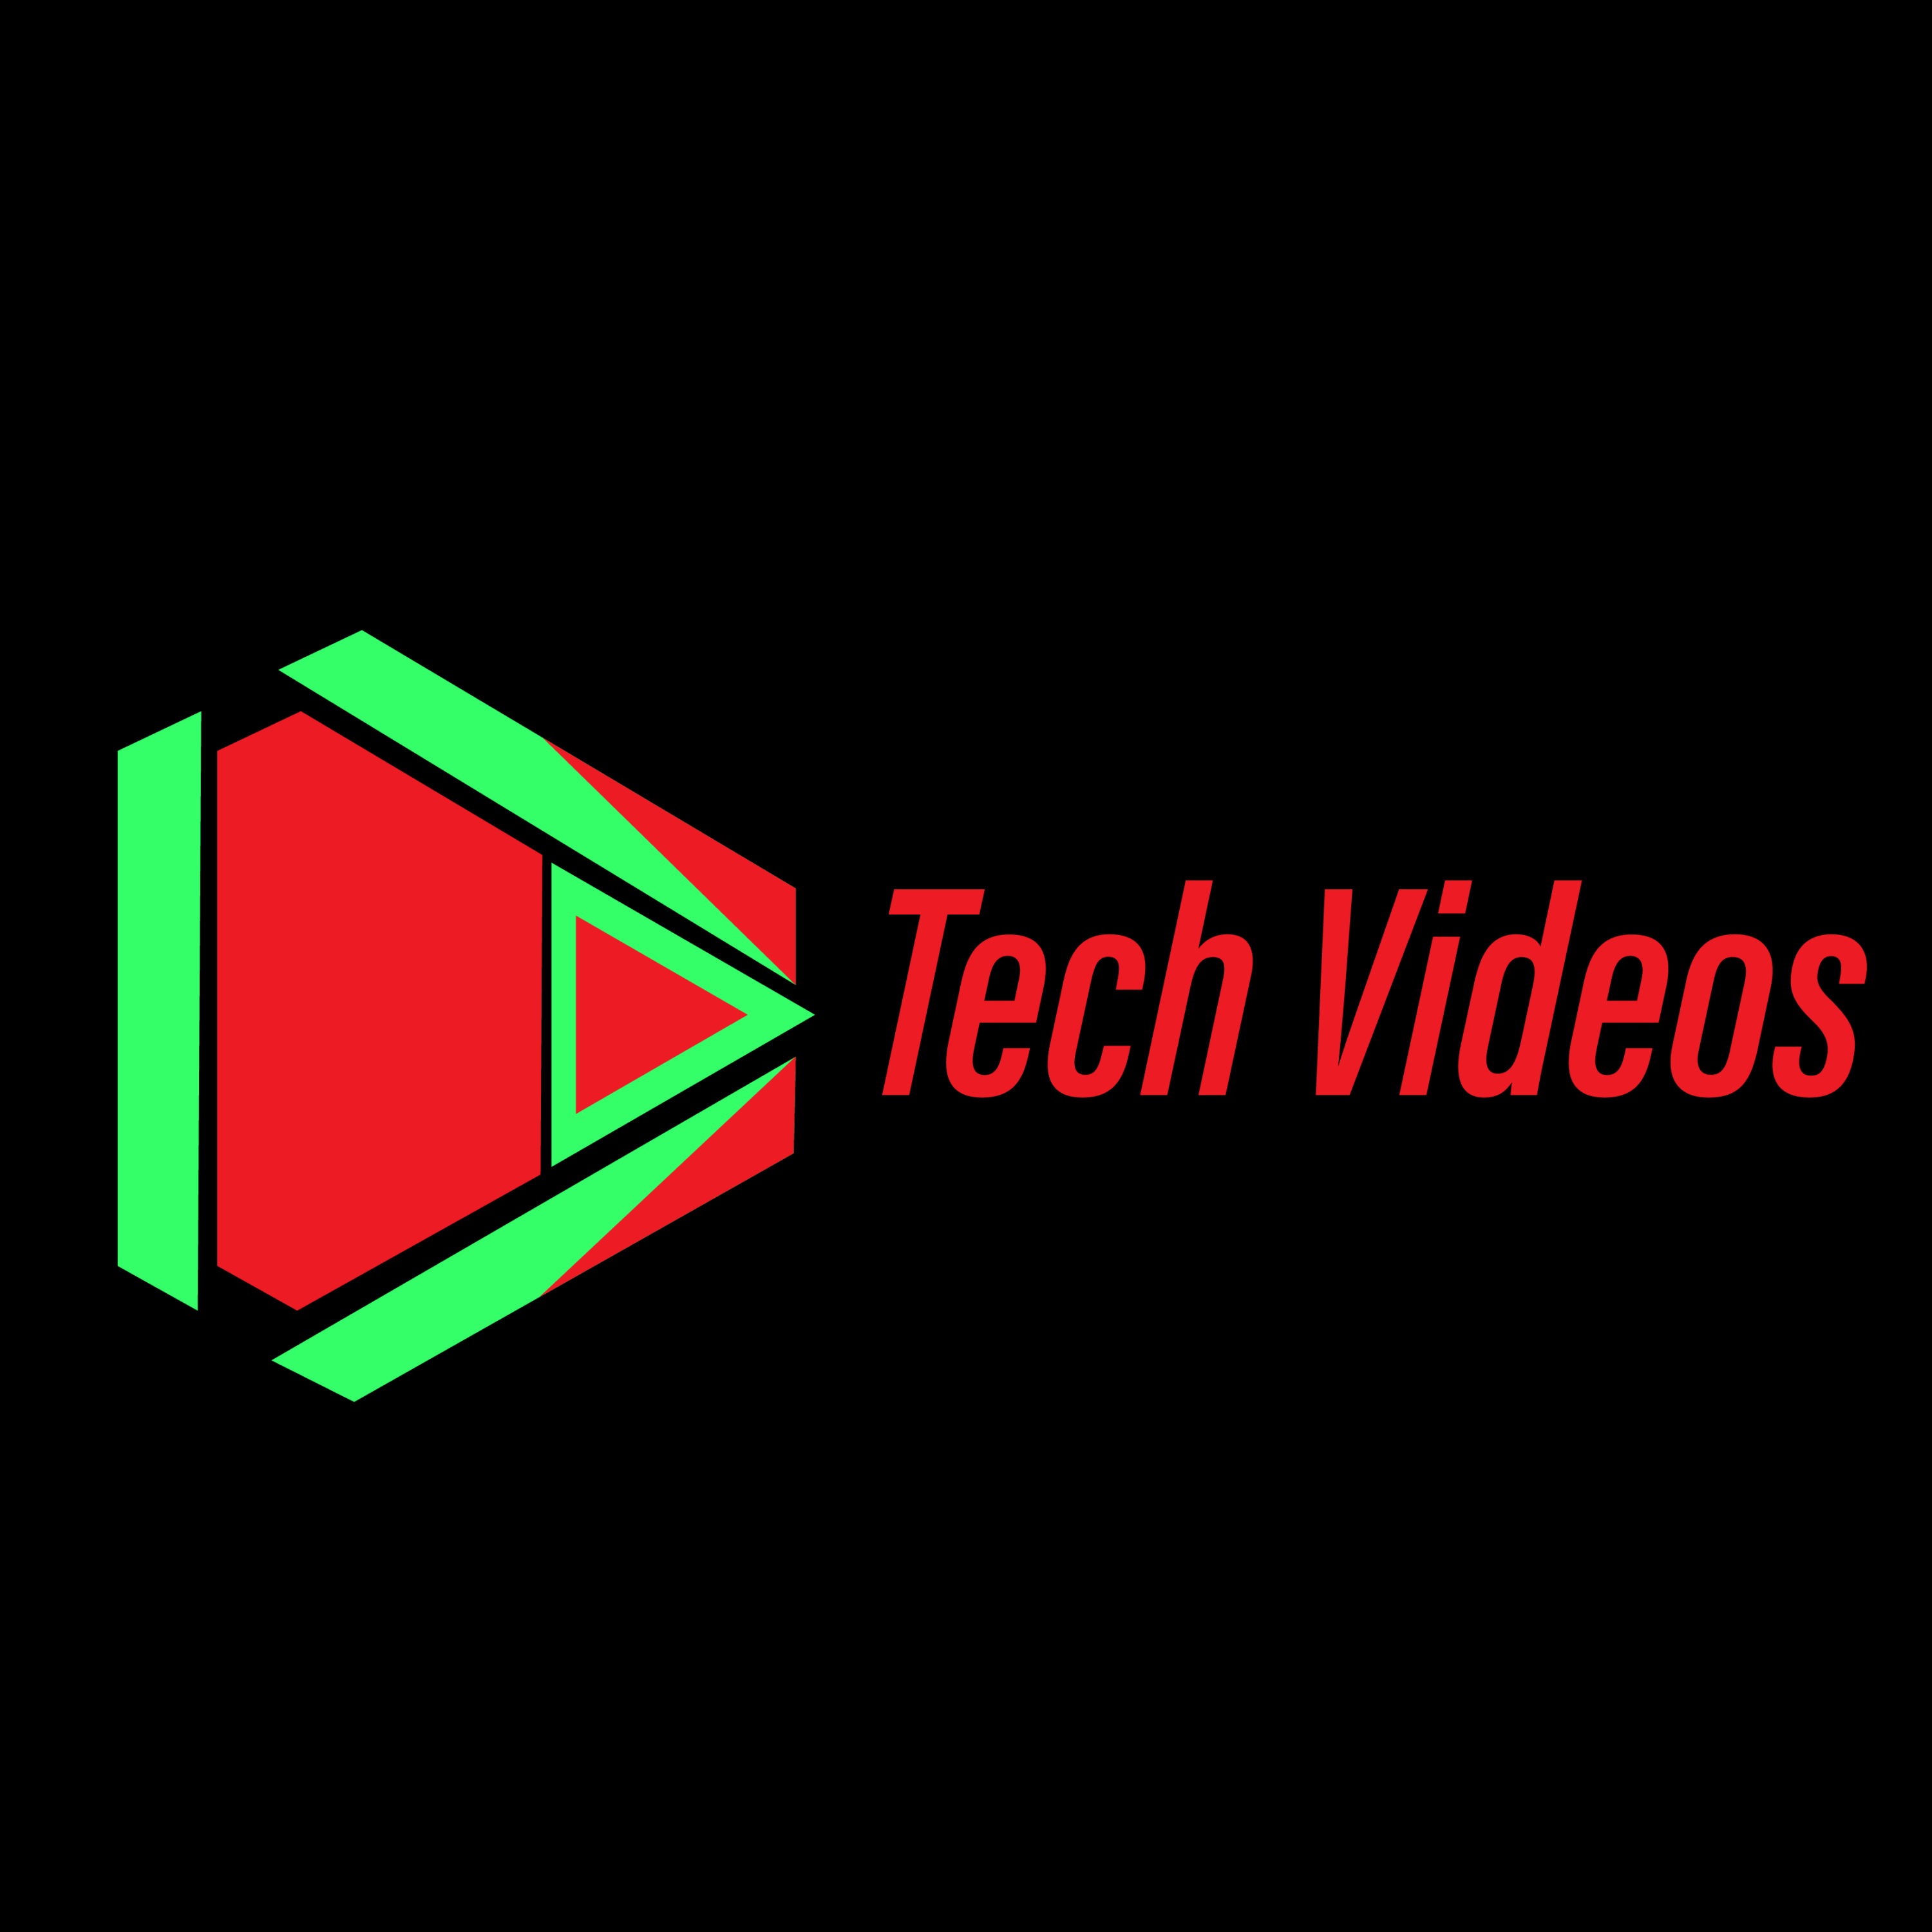 Video Icon Logo, red logo on dark background.